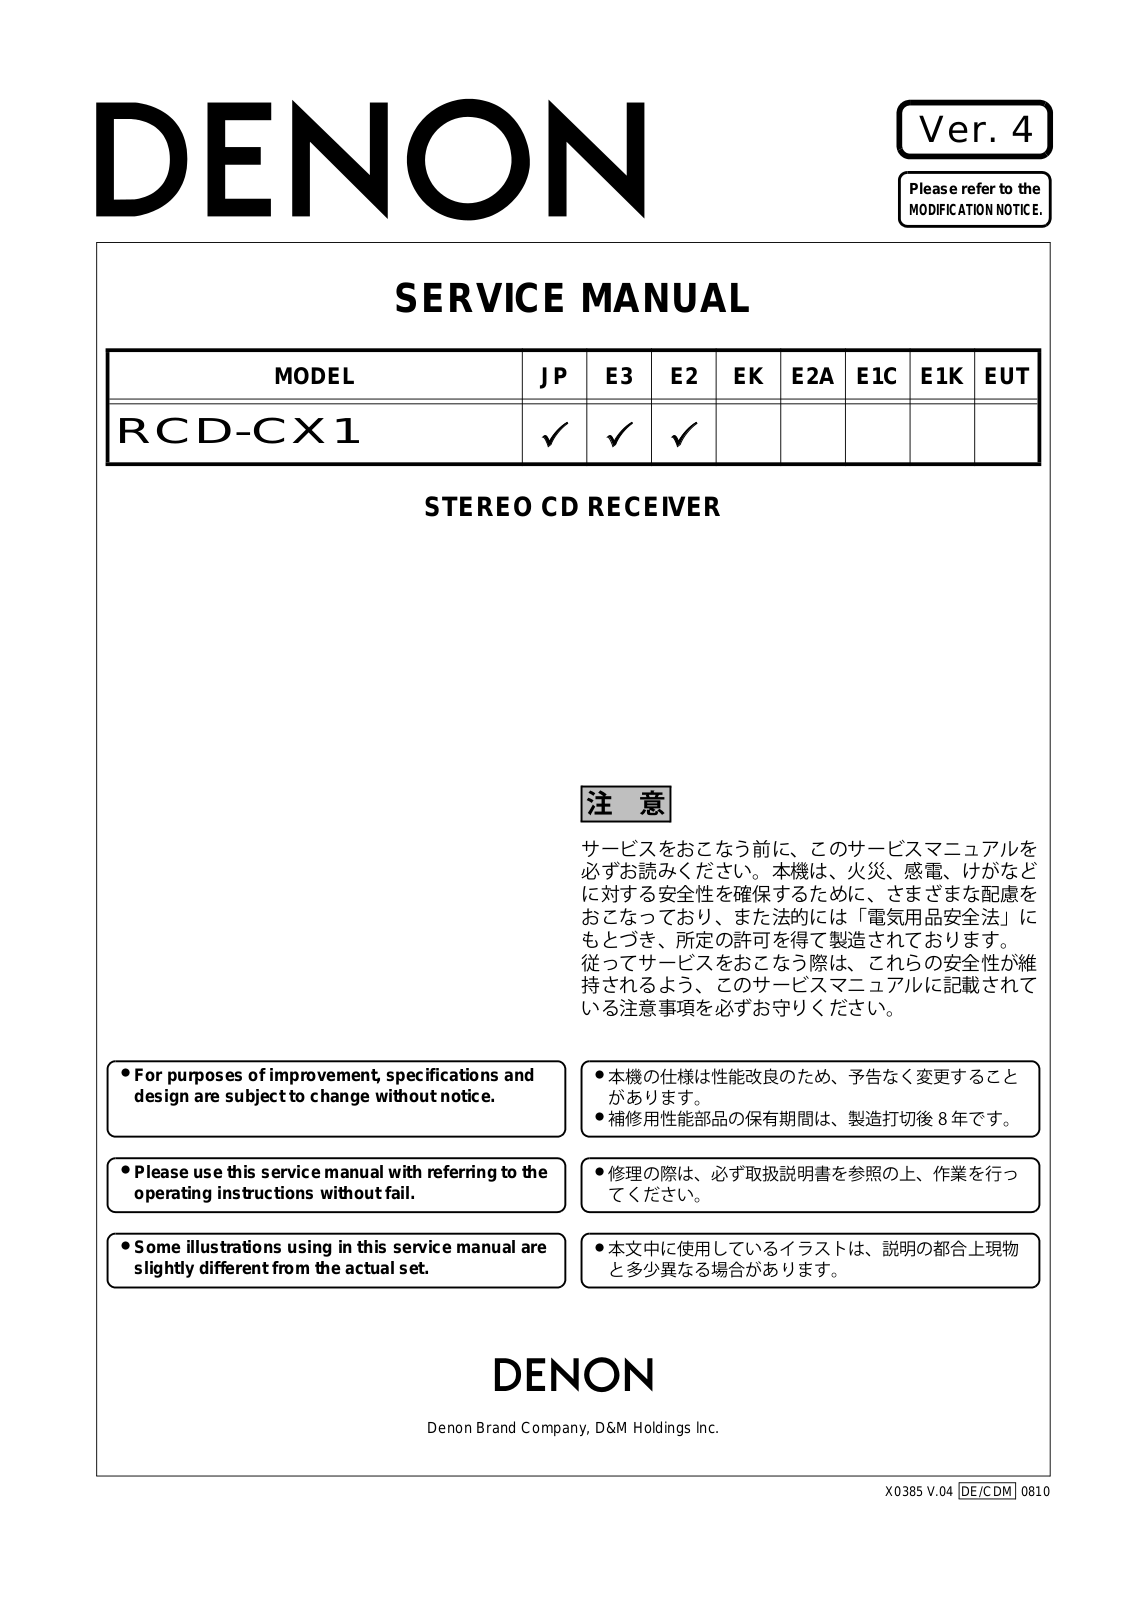 Denon RCD-CX1 Service Manual